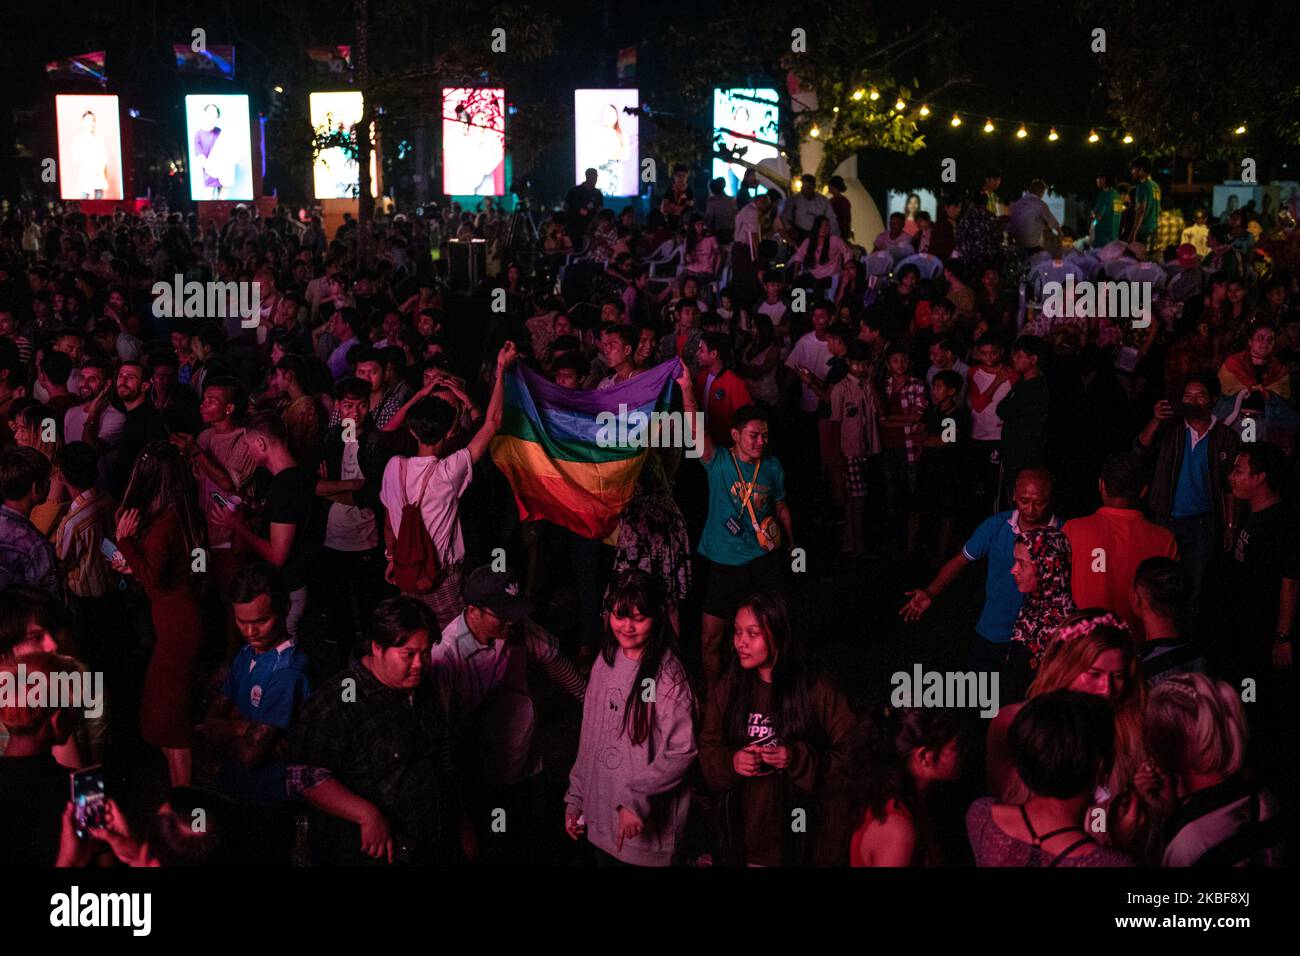 People take part in the ”&Proud' LGBT festival in Yangon, Myanmar on 24 January, 2020. (Photo by Shwe Paw Mya Tin/NurPhoto) Stock Photo